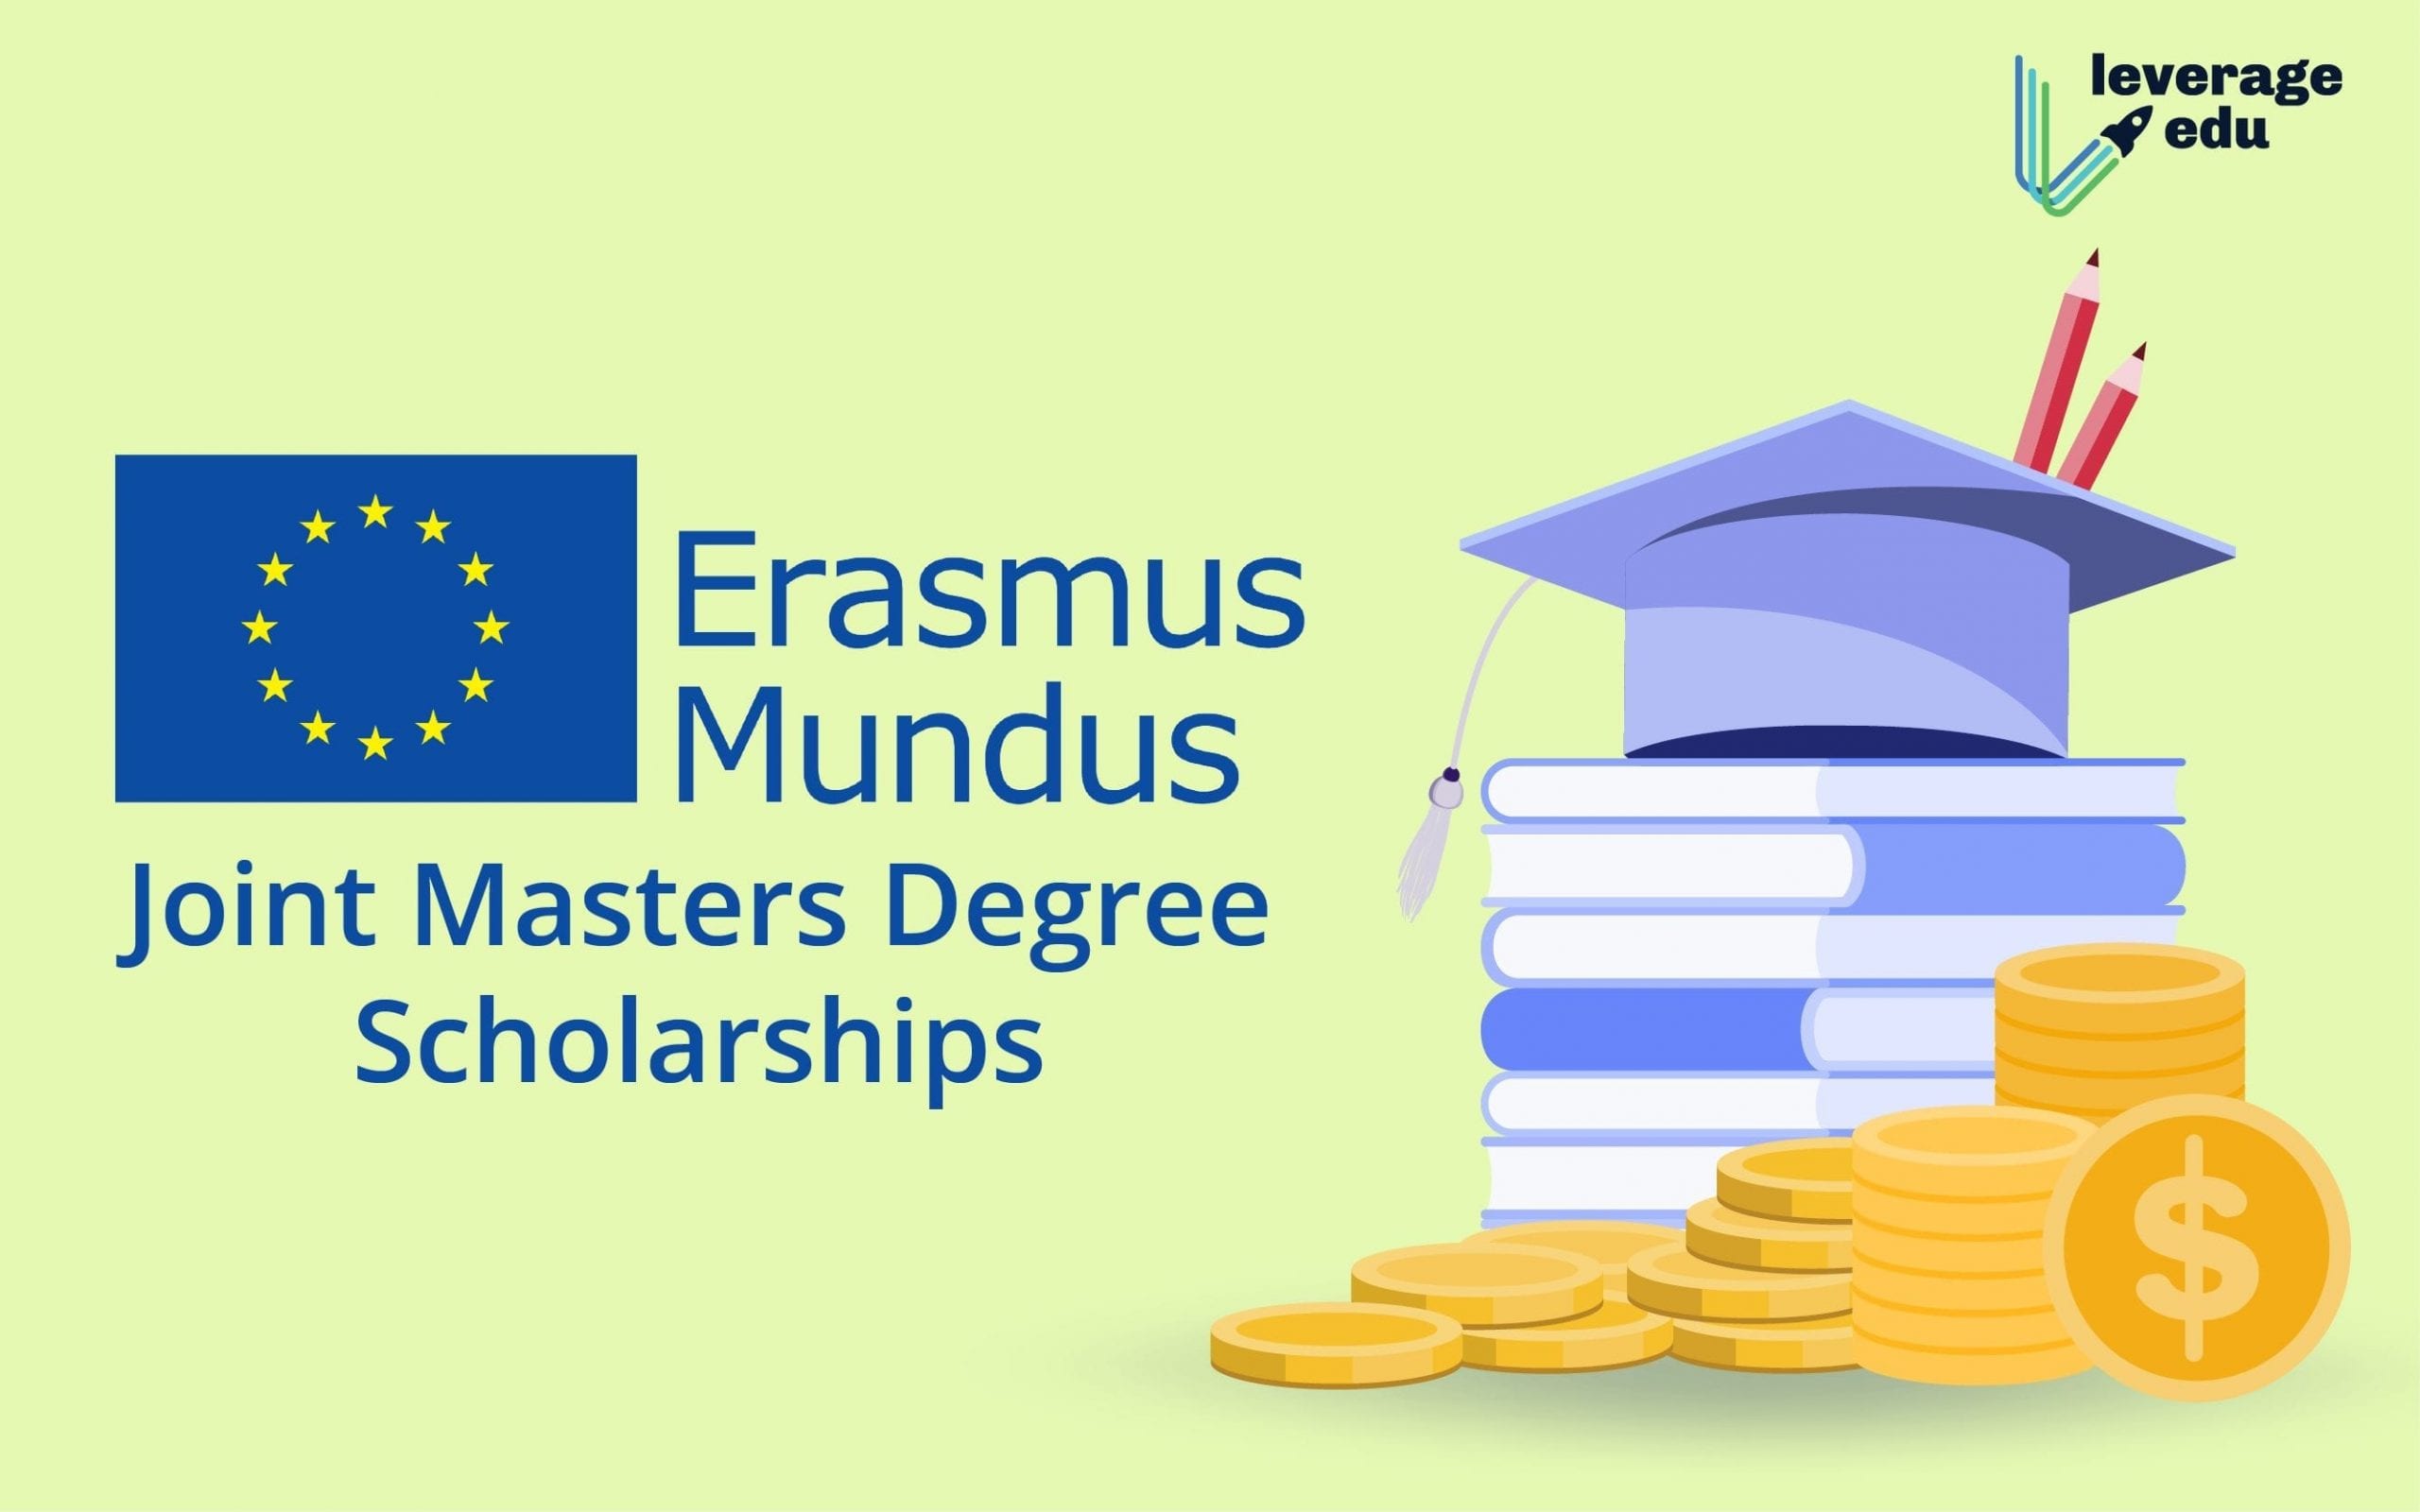 Erasmus Mundus Joint Masters Degree Scholarship Leverage Edu